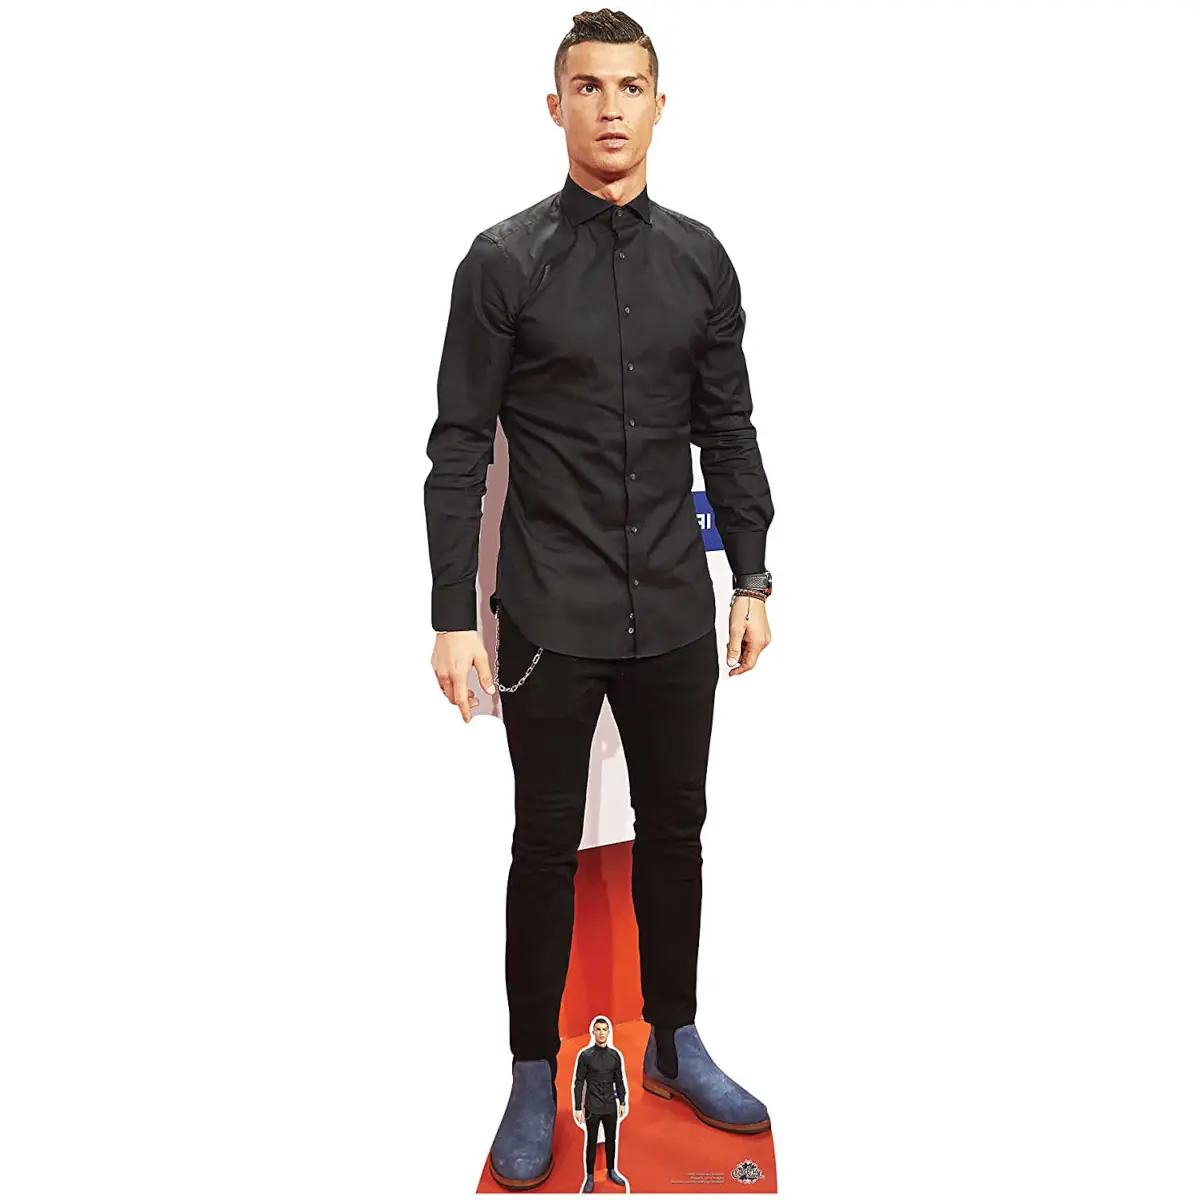 CS649 Cristiano Ronaldo Portuguese Footballer Lifesize Mini Cardboard Cutout Standee